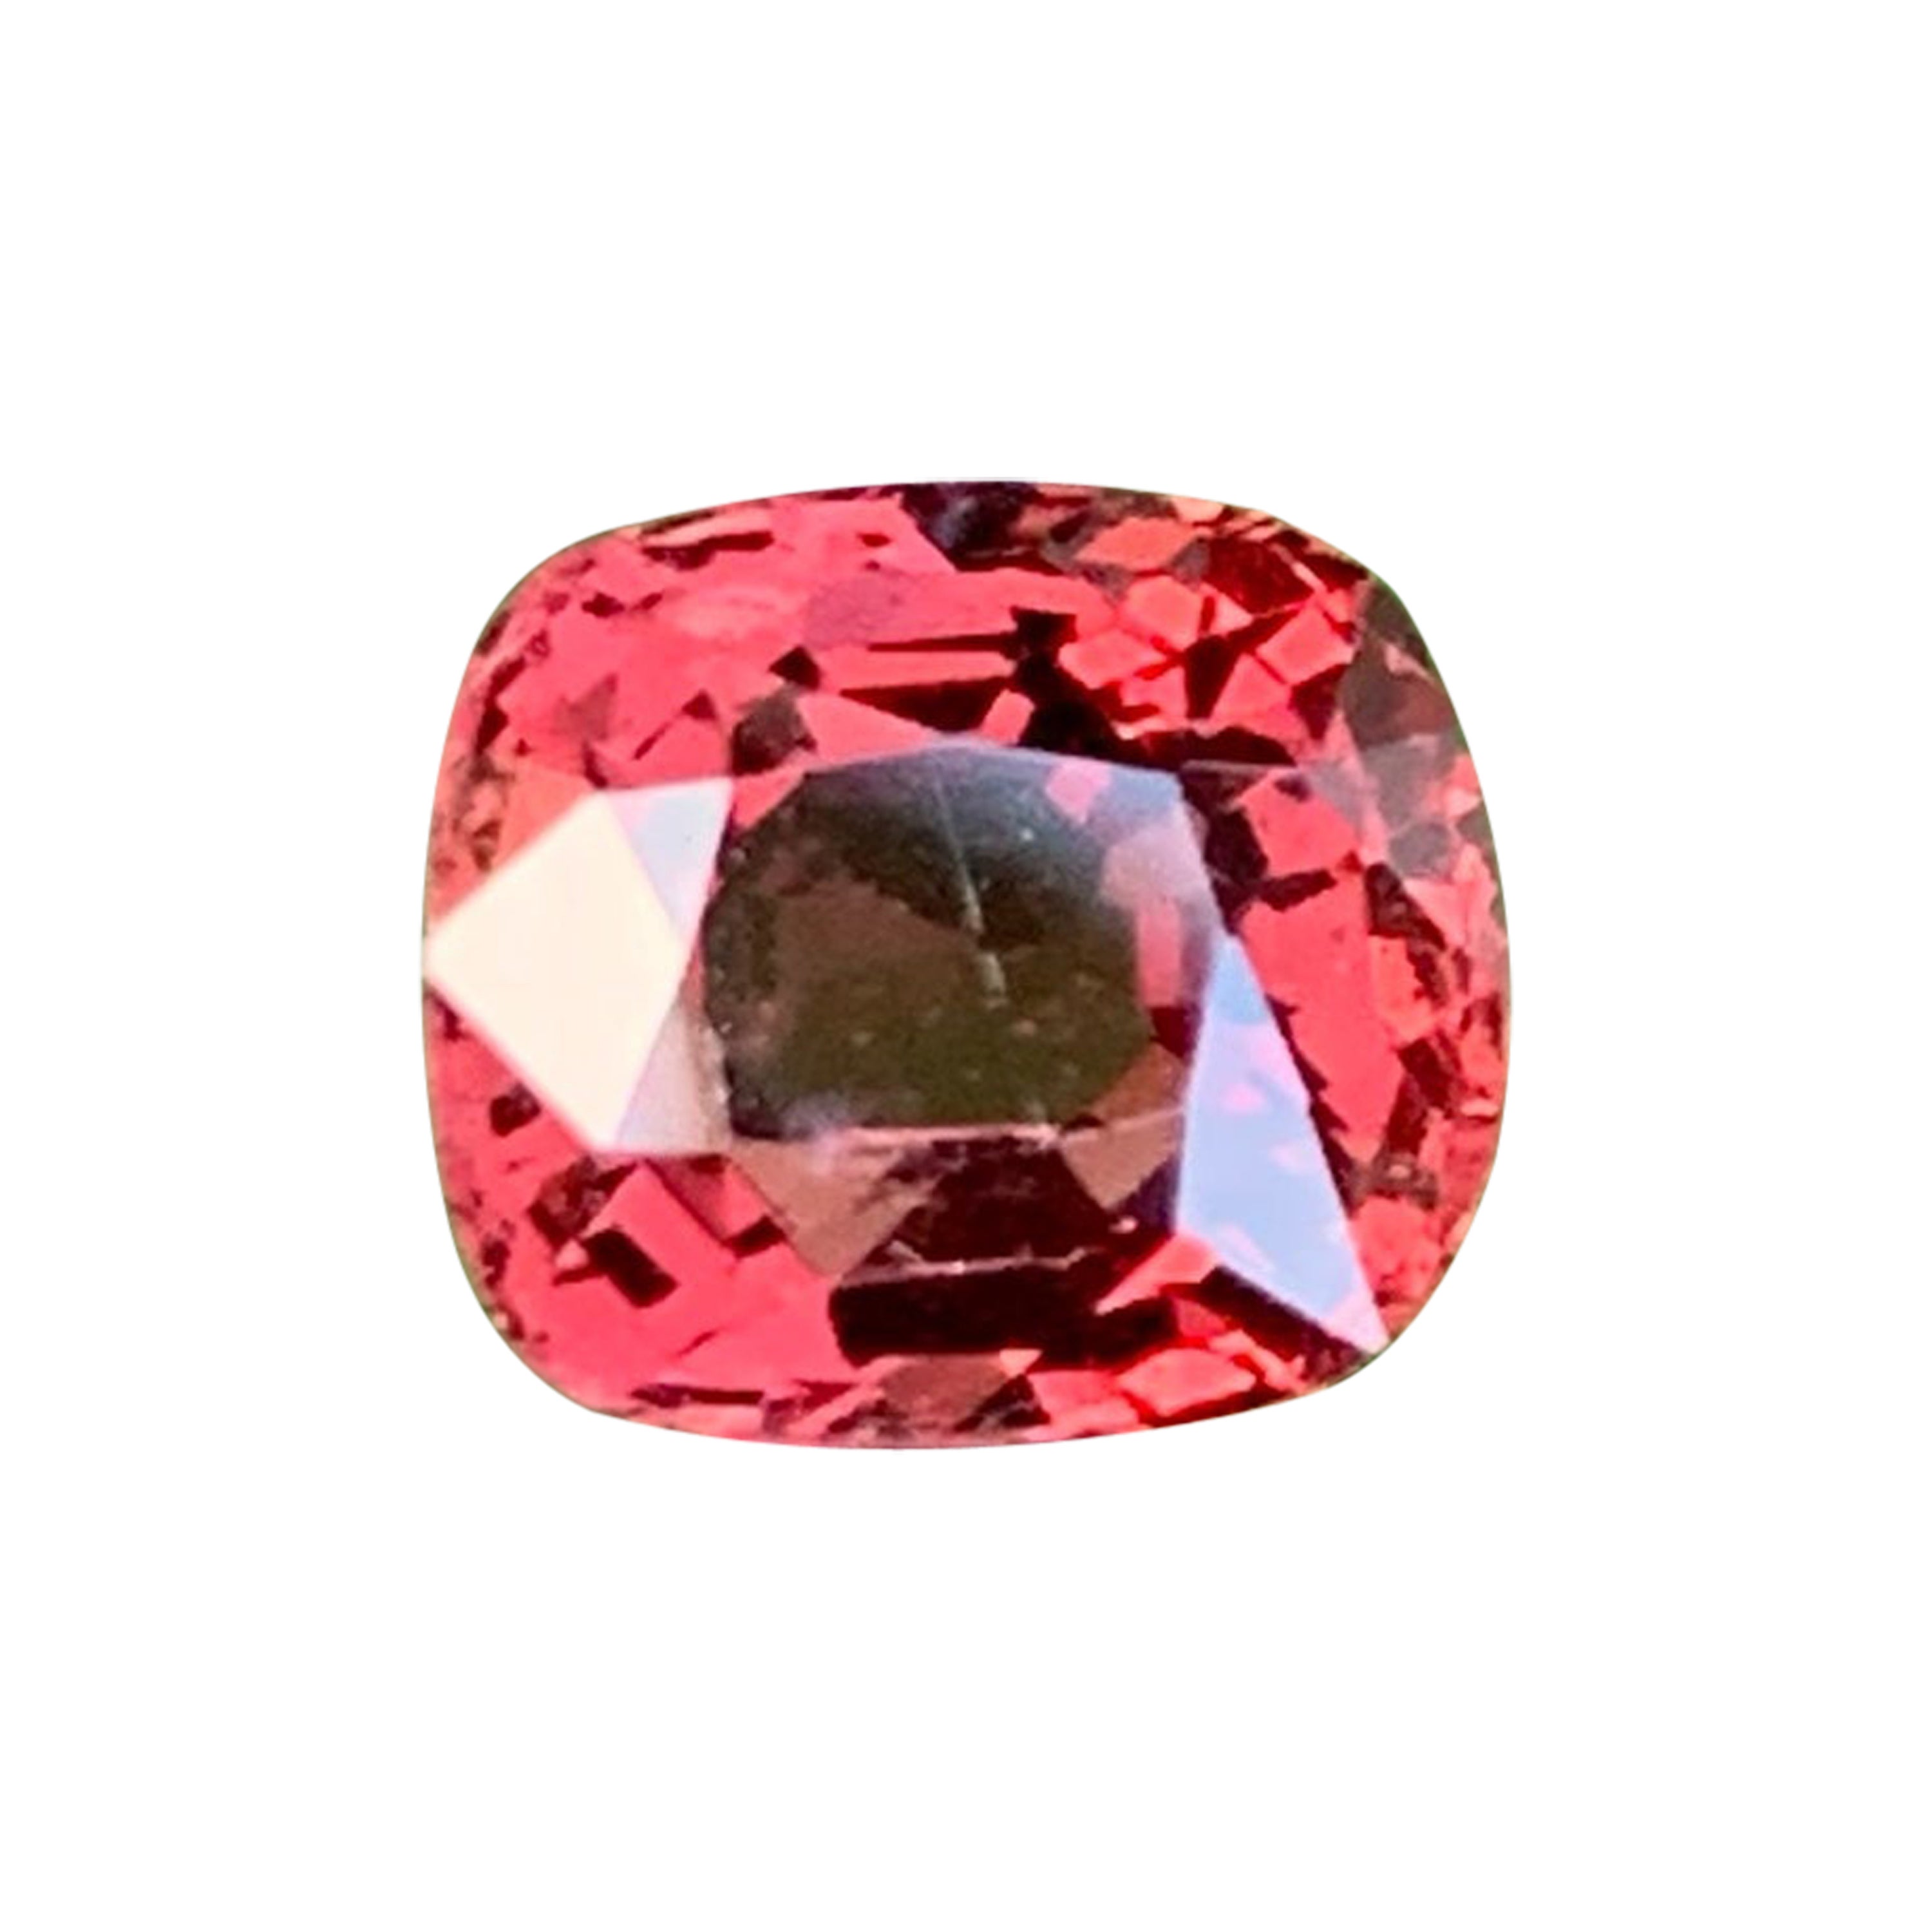 Majestueuse pierre prcieuse de spinelle rouge orange taille spinelle de 1,15 carat certifie AIG en vente